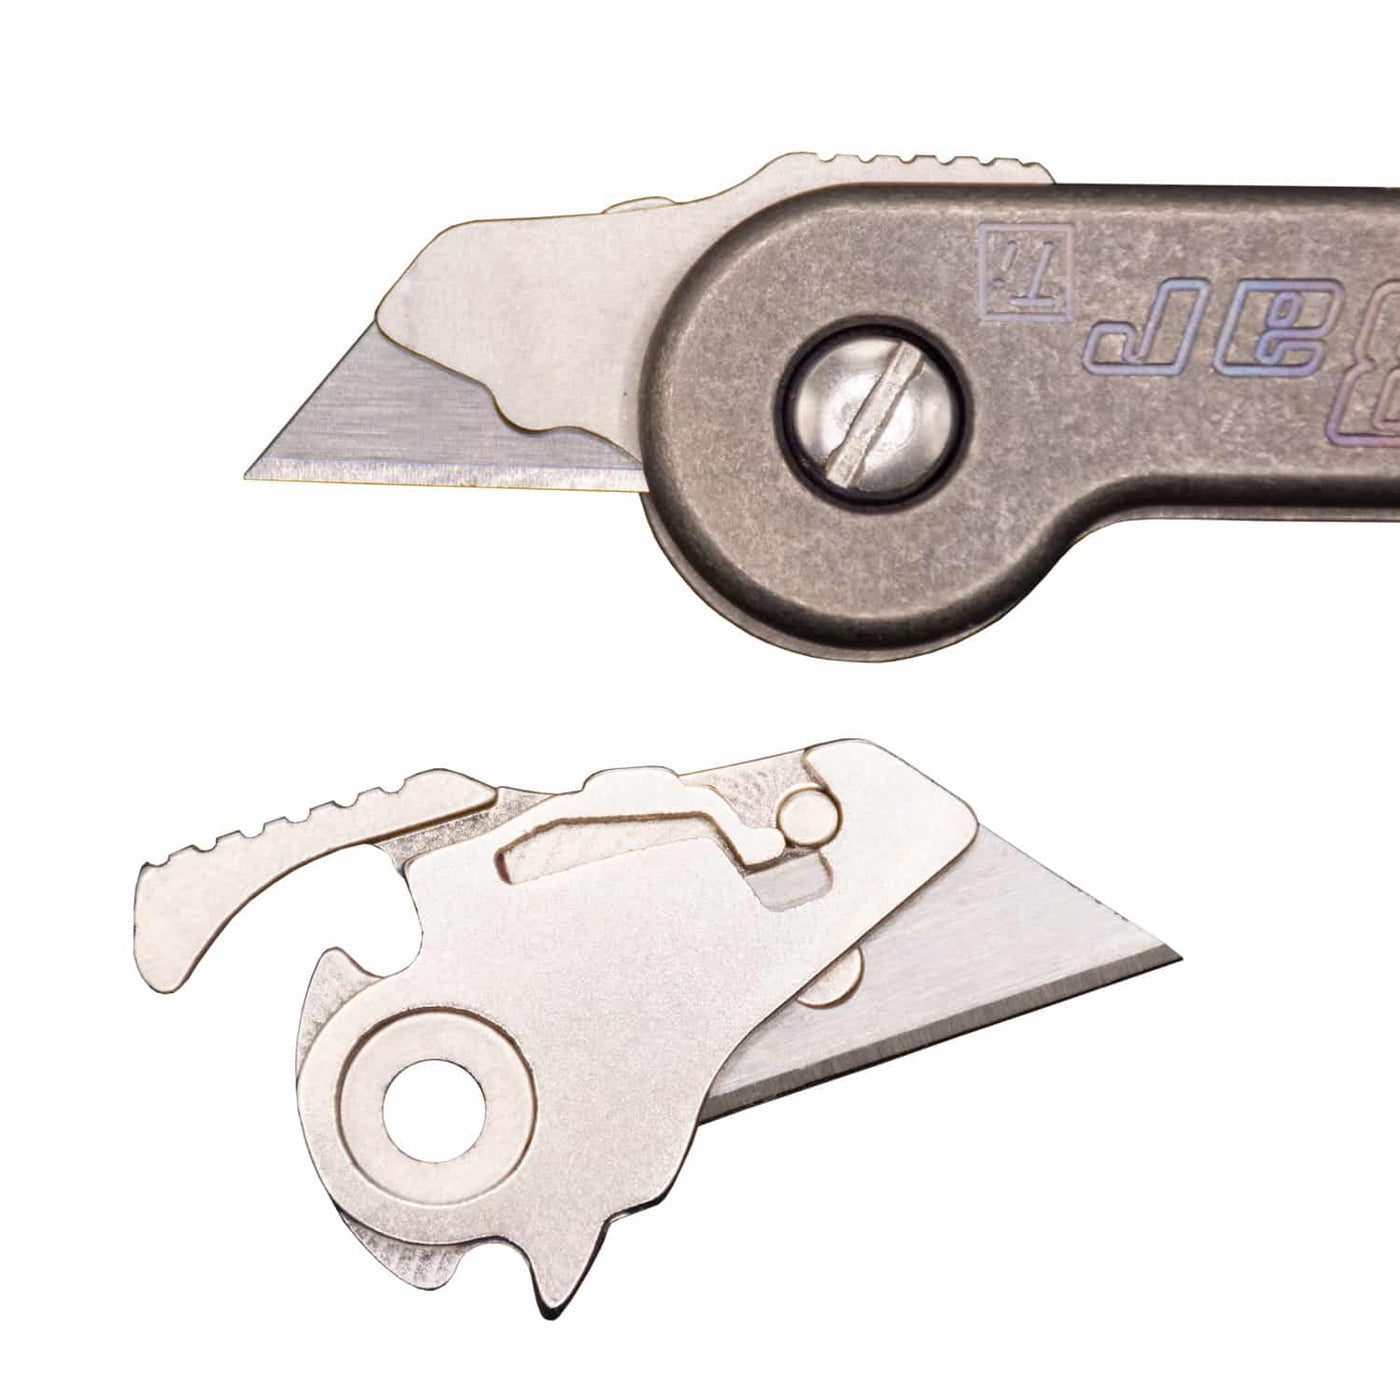 Tool Insert Set: Mini Utility Tool & Phillips Screwdriver with Locking Plate Keybar